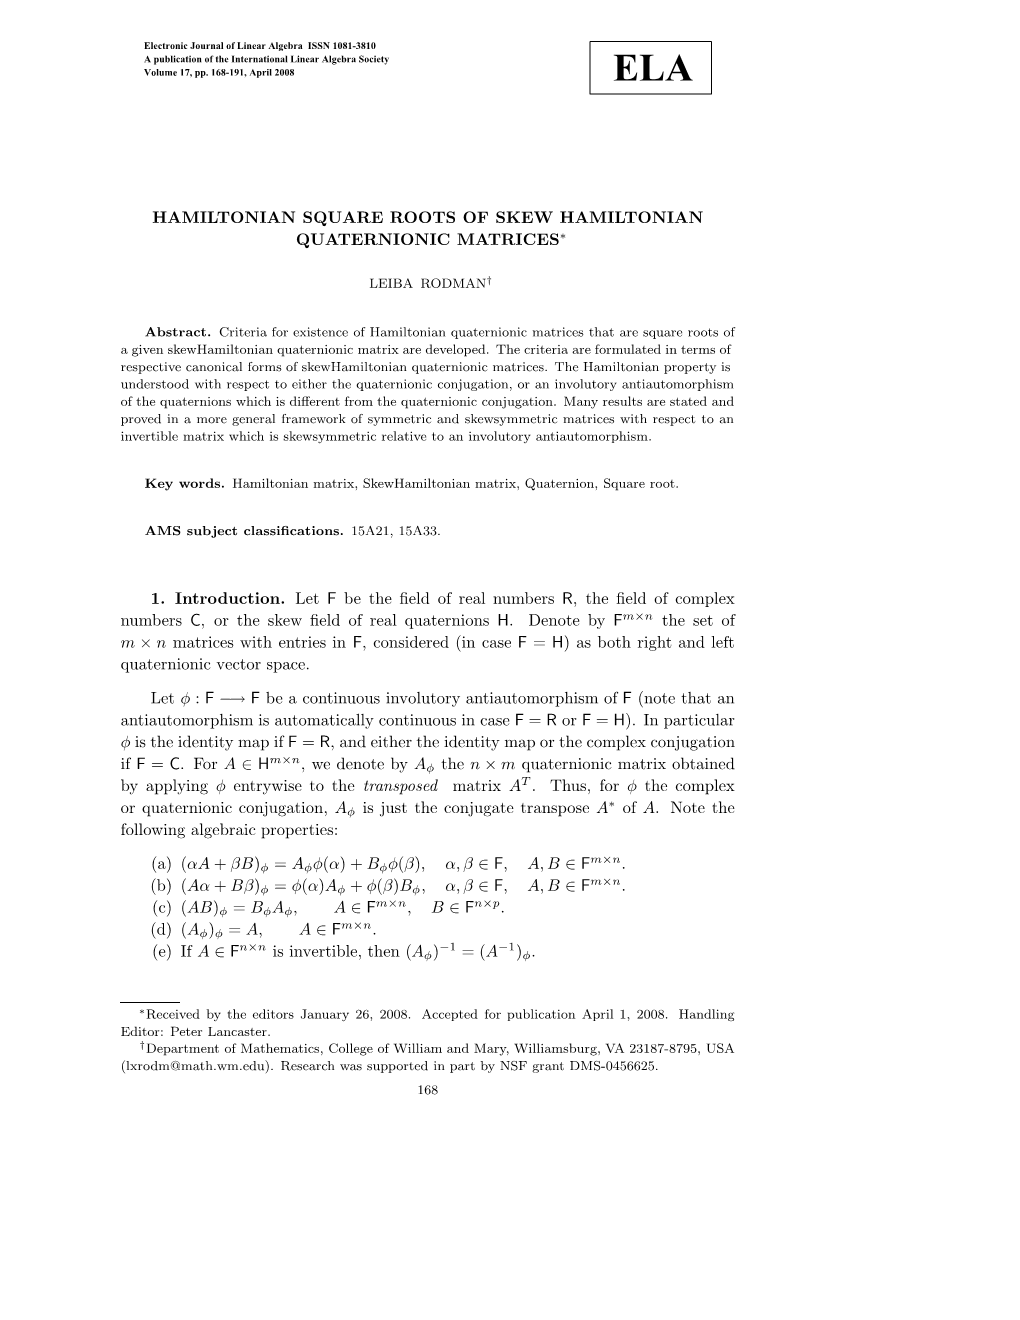 Hamiltonian Square Roots of Skew Hamiltonian Quaternionic Matrices∗